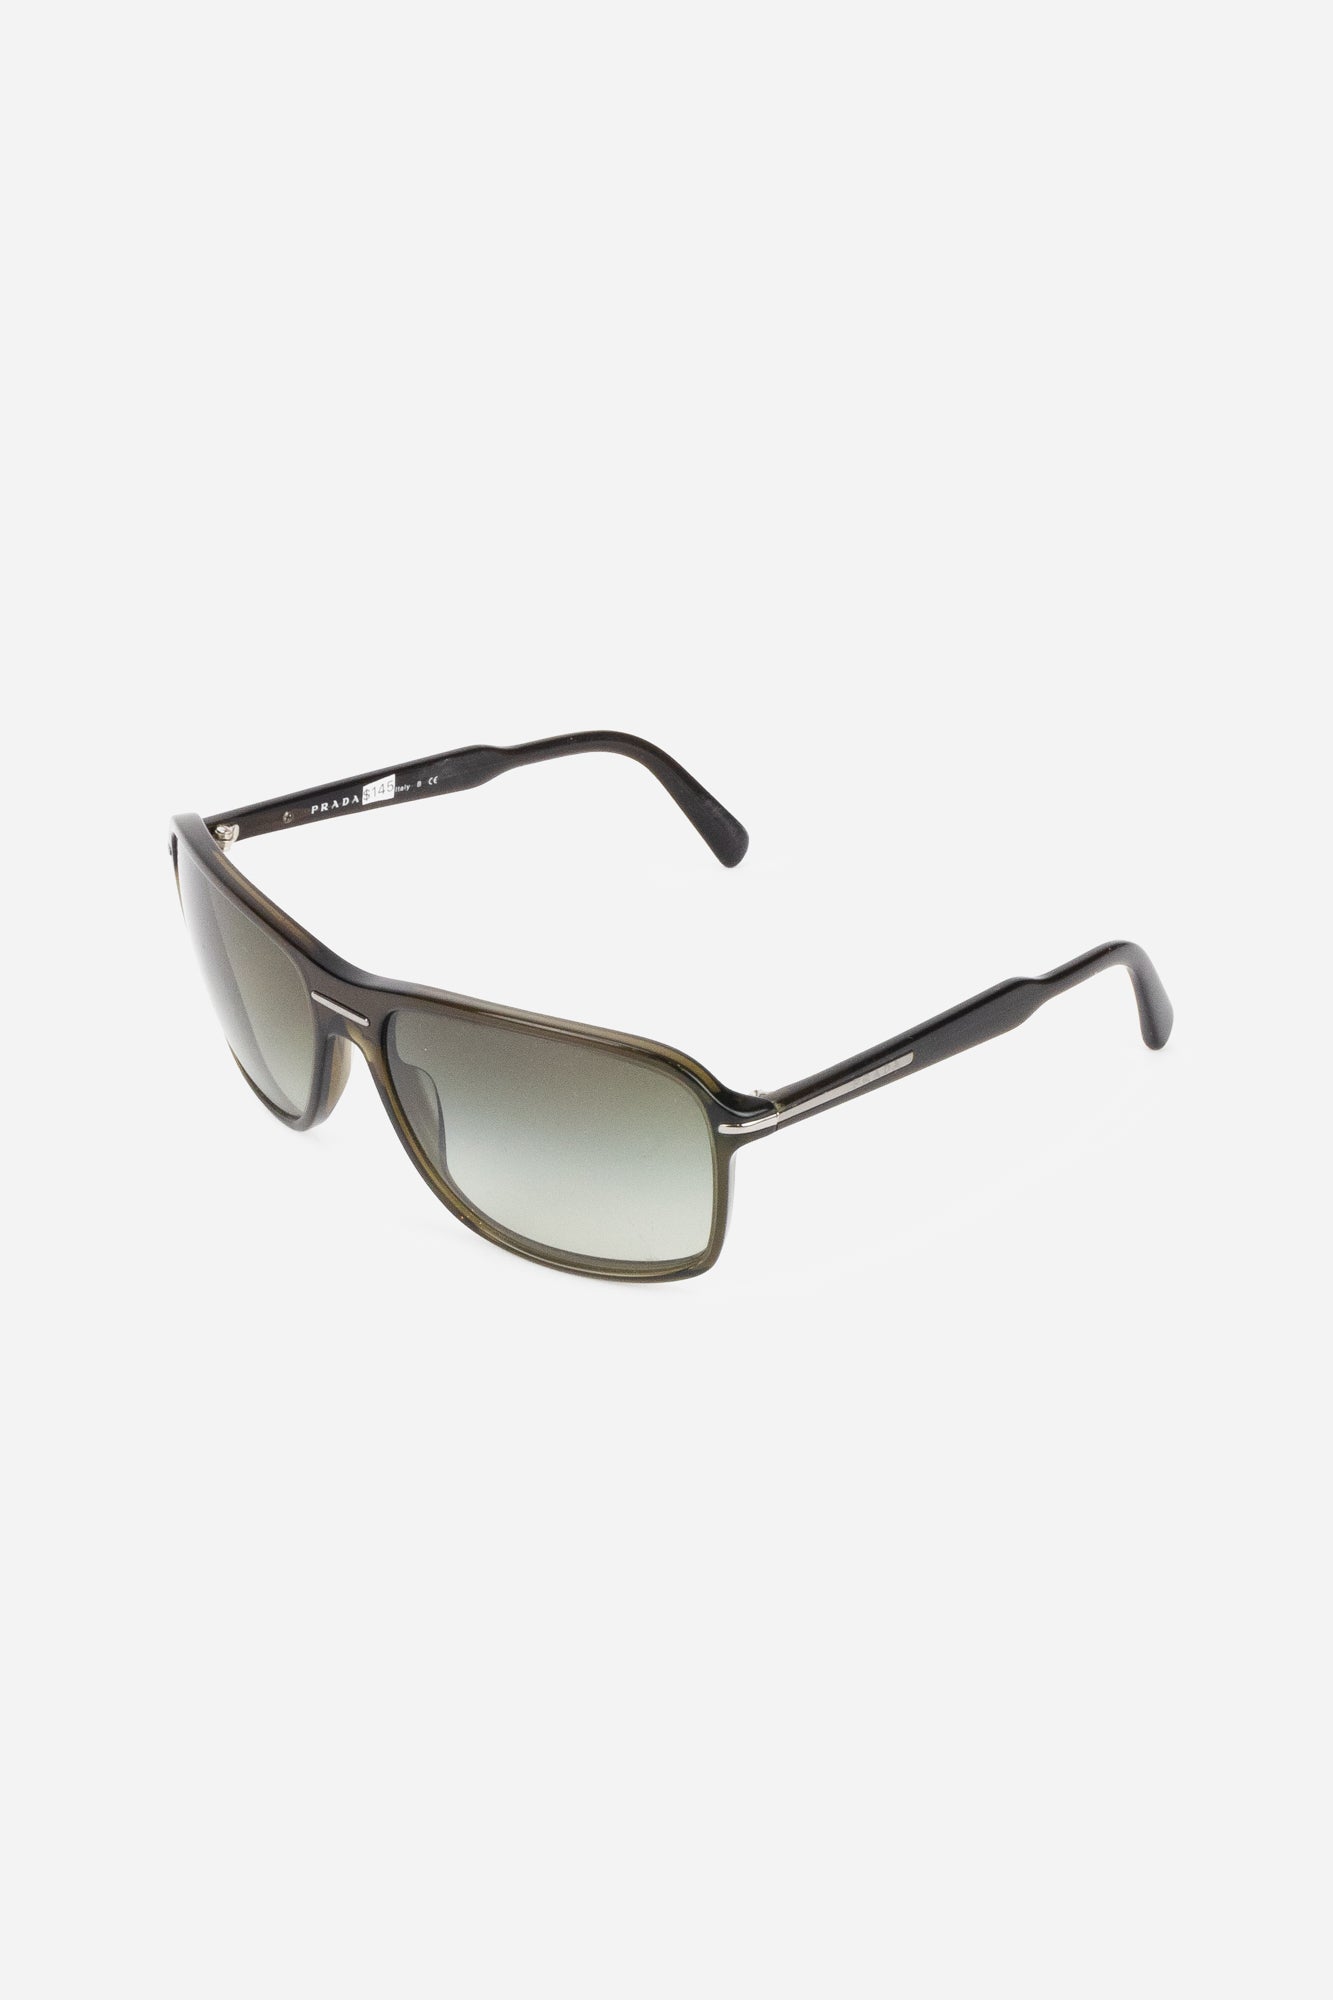 Olive Green Gradient Lens Sunglasses